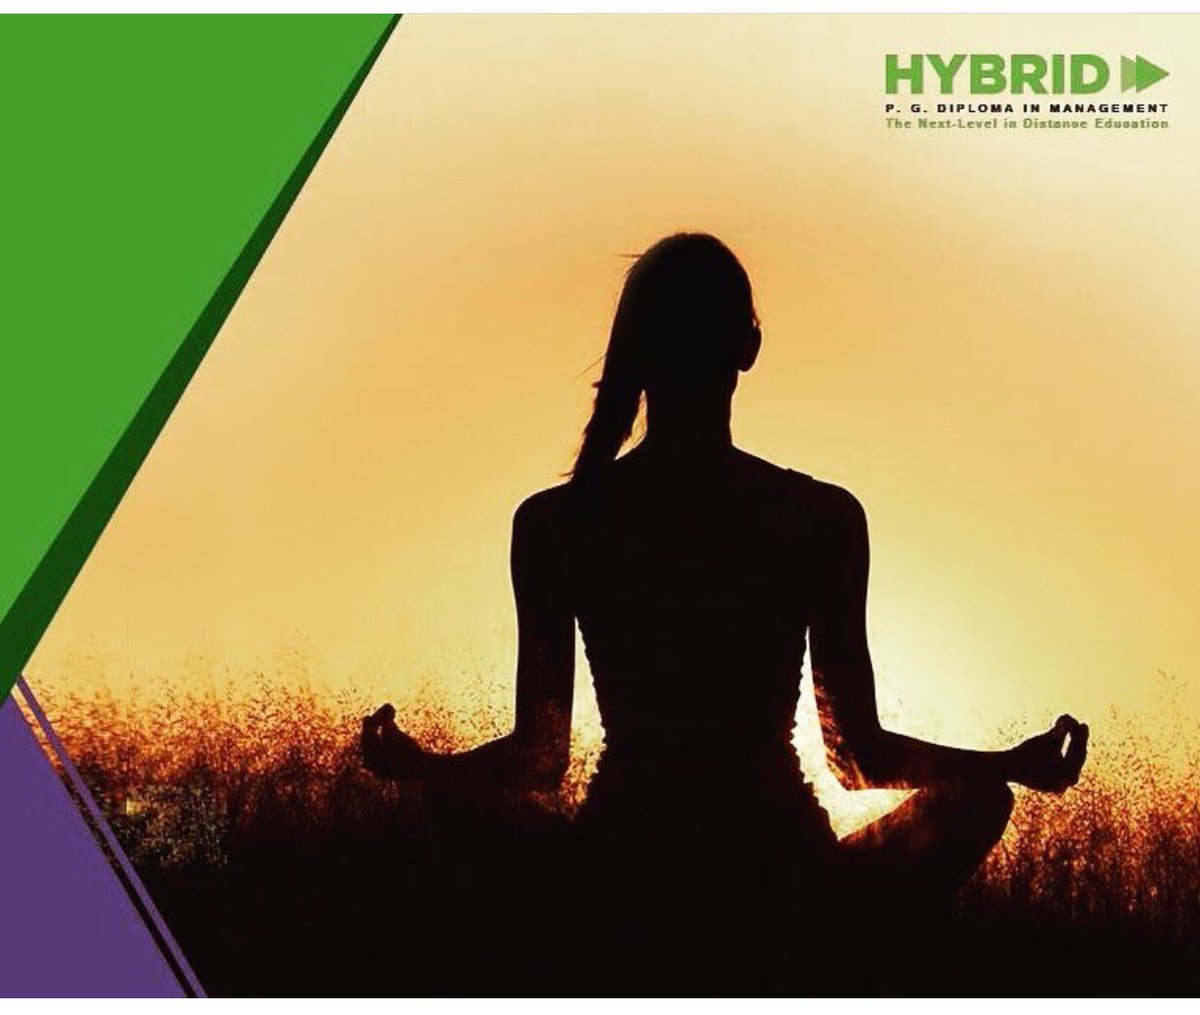 Spiritual Visit Workshop by @welingkareducation 
Dates: Friday 25th May @ 1.00 PM & Saturday 26th May @ 4.00 PM.
Venue: Welingkar Hybrid Program, Mumbai.
.
.
.
#yoga #yogaeverydamnday #yogalove #yogachallenge #yogainspiration #yogaeverywhere #yogagram #spiritual #events #mumbai